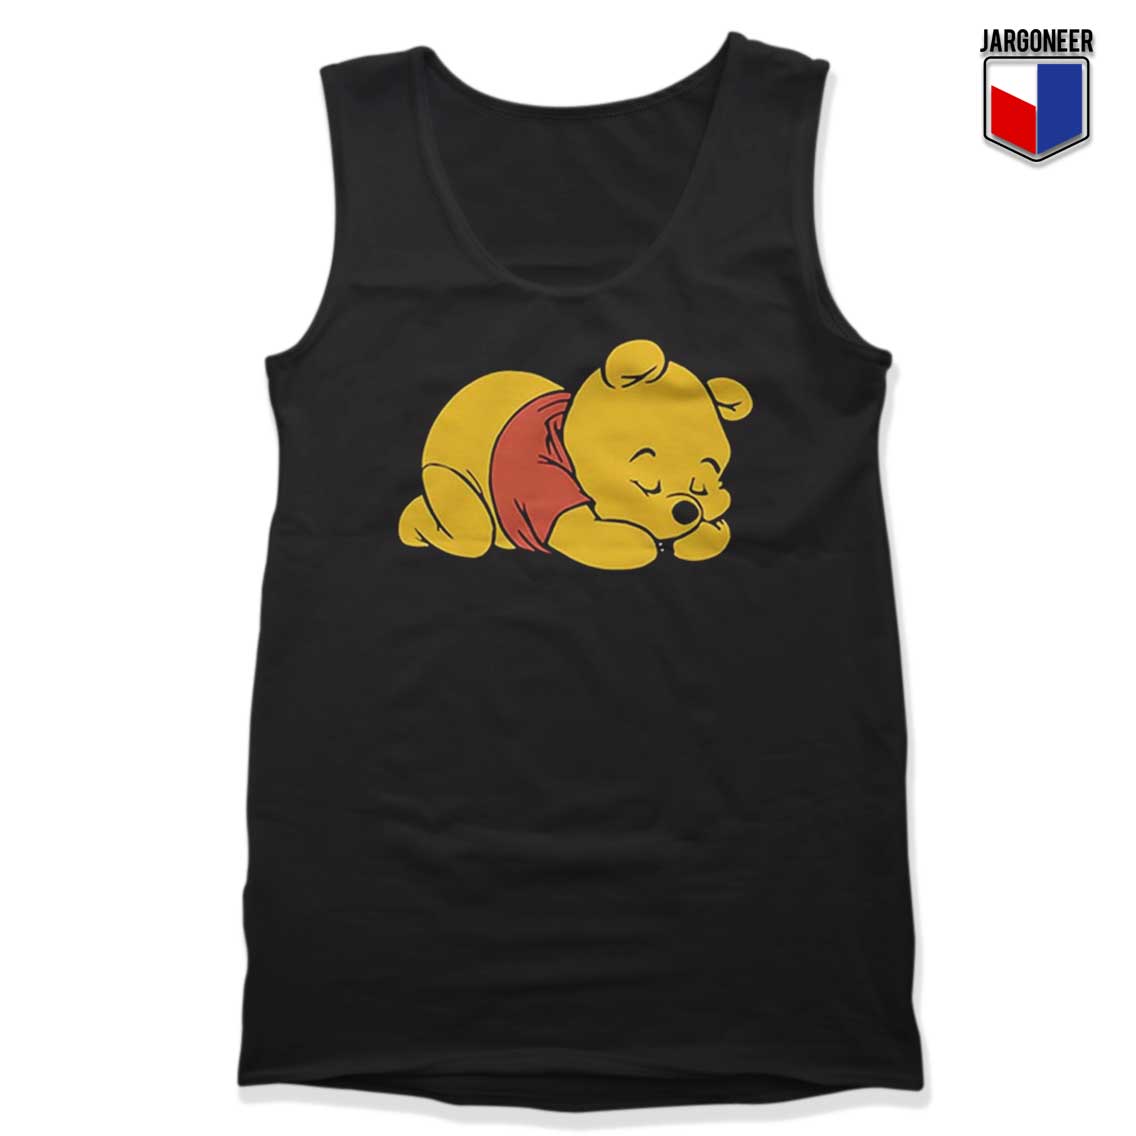 Winnie the Pooh Cartoon Tank Top - Shop Unique Graphic Cool Shirt Designs